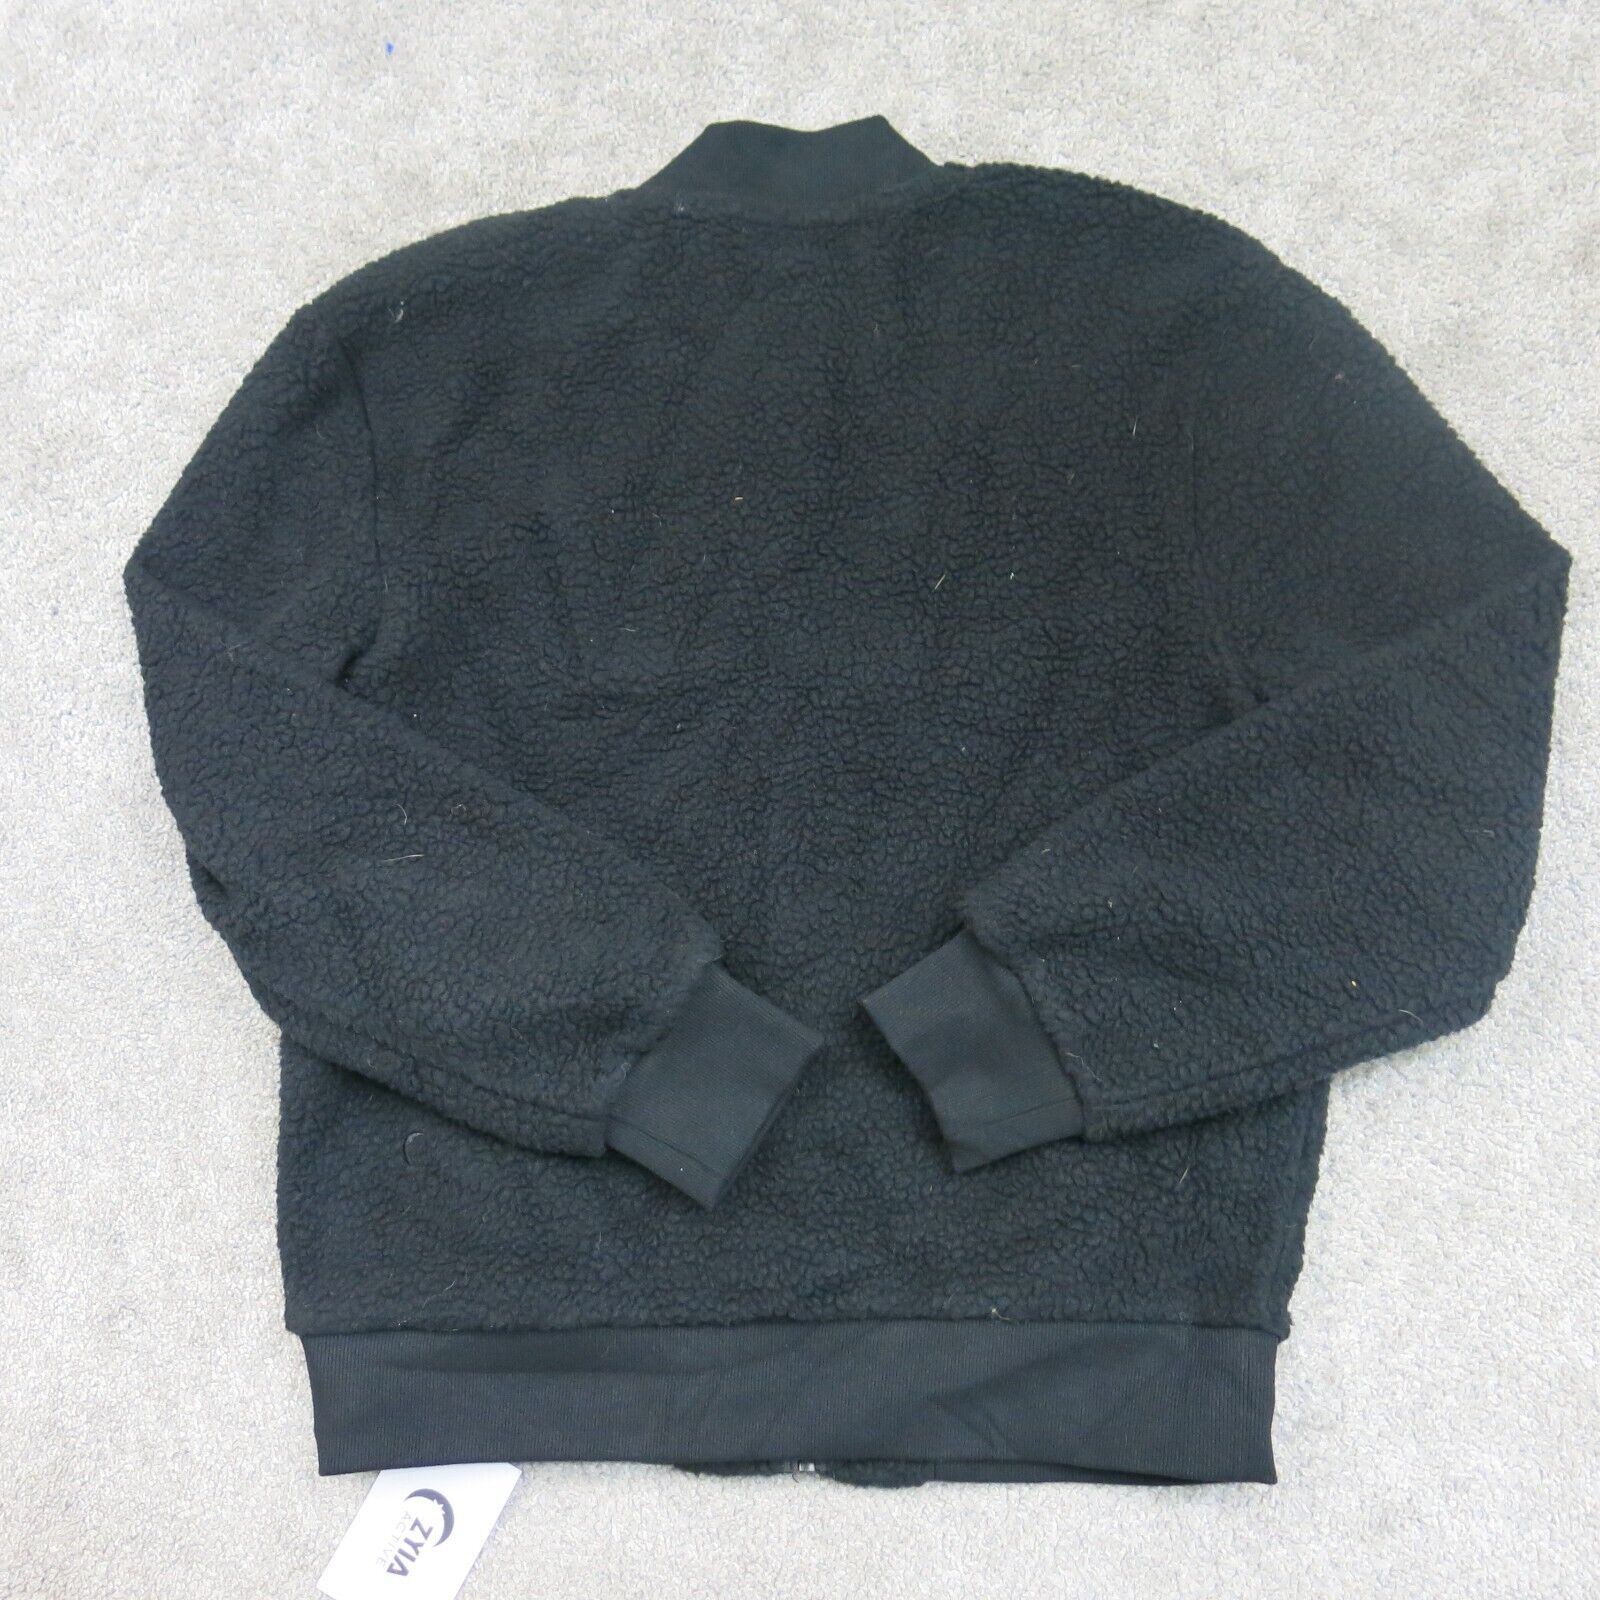 ZYIA, Jackets & Coats, Zyia Activewear Black Plush Jacket Nwt